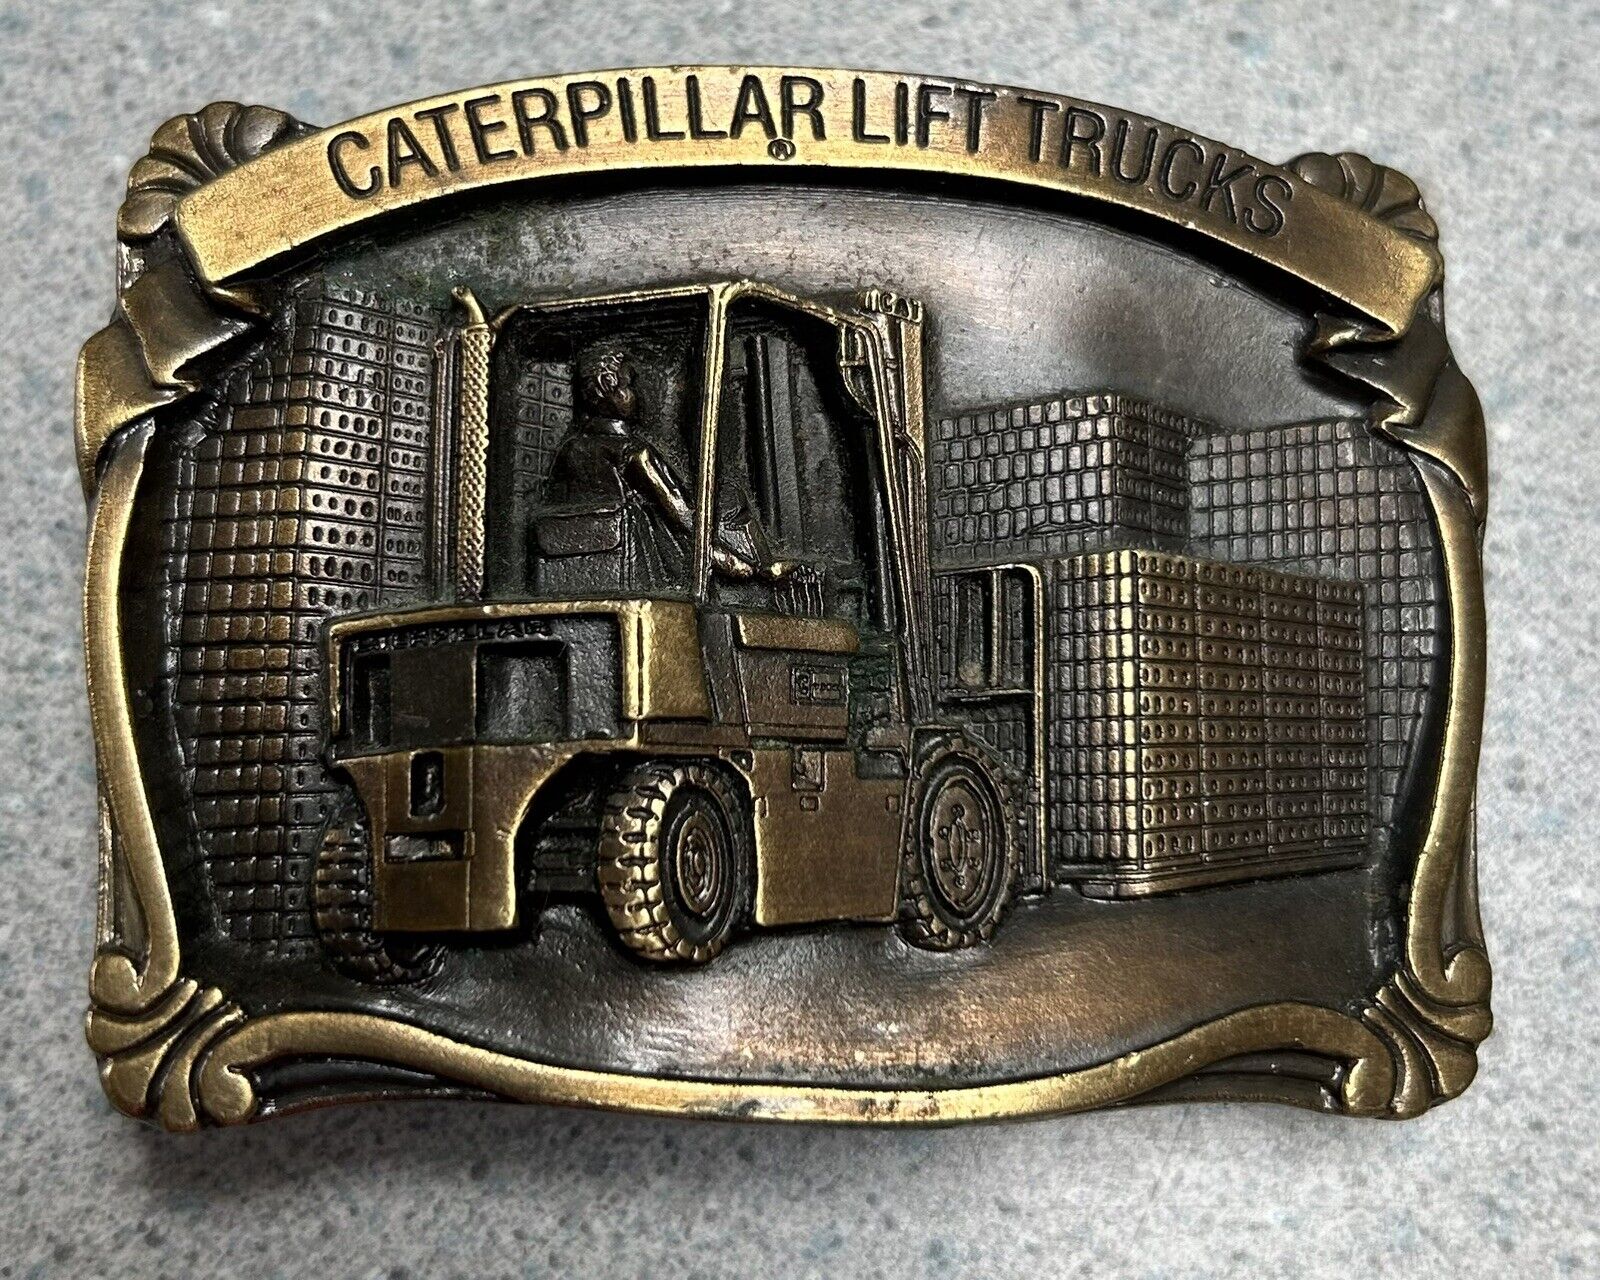 1988 Caterpillar CAT Tractor Caterpillar Lift Trucks Vintage Belt Buckle